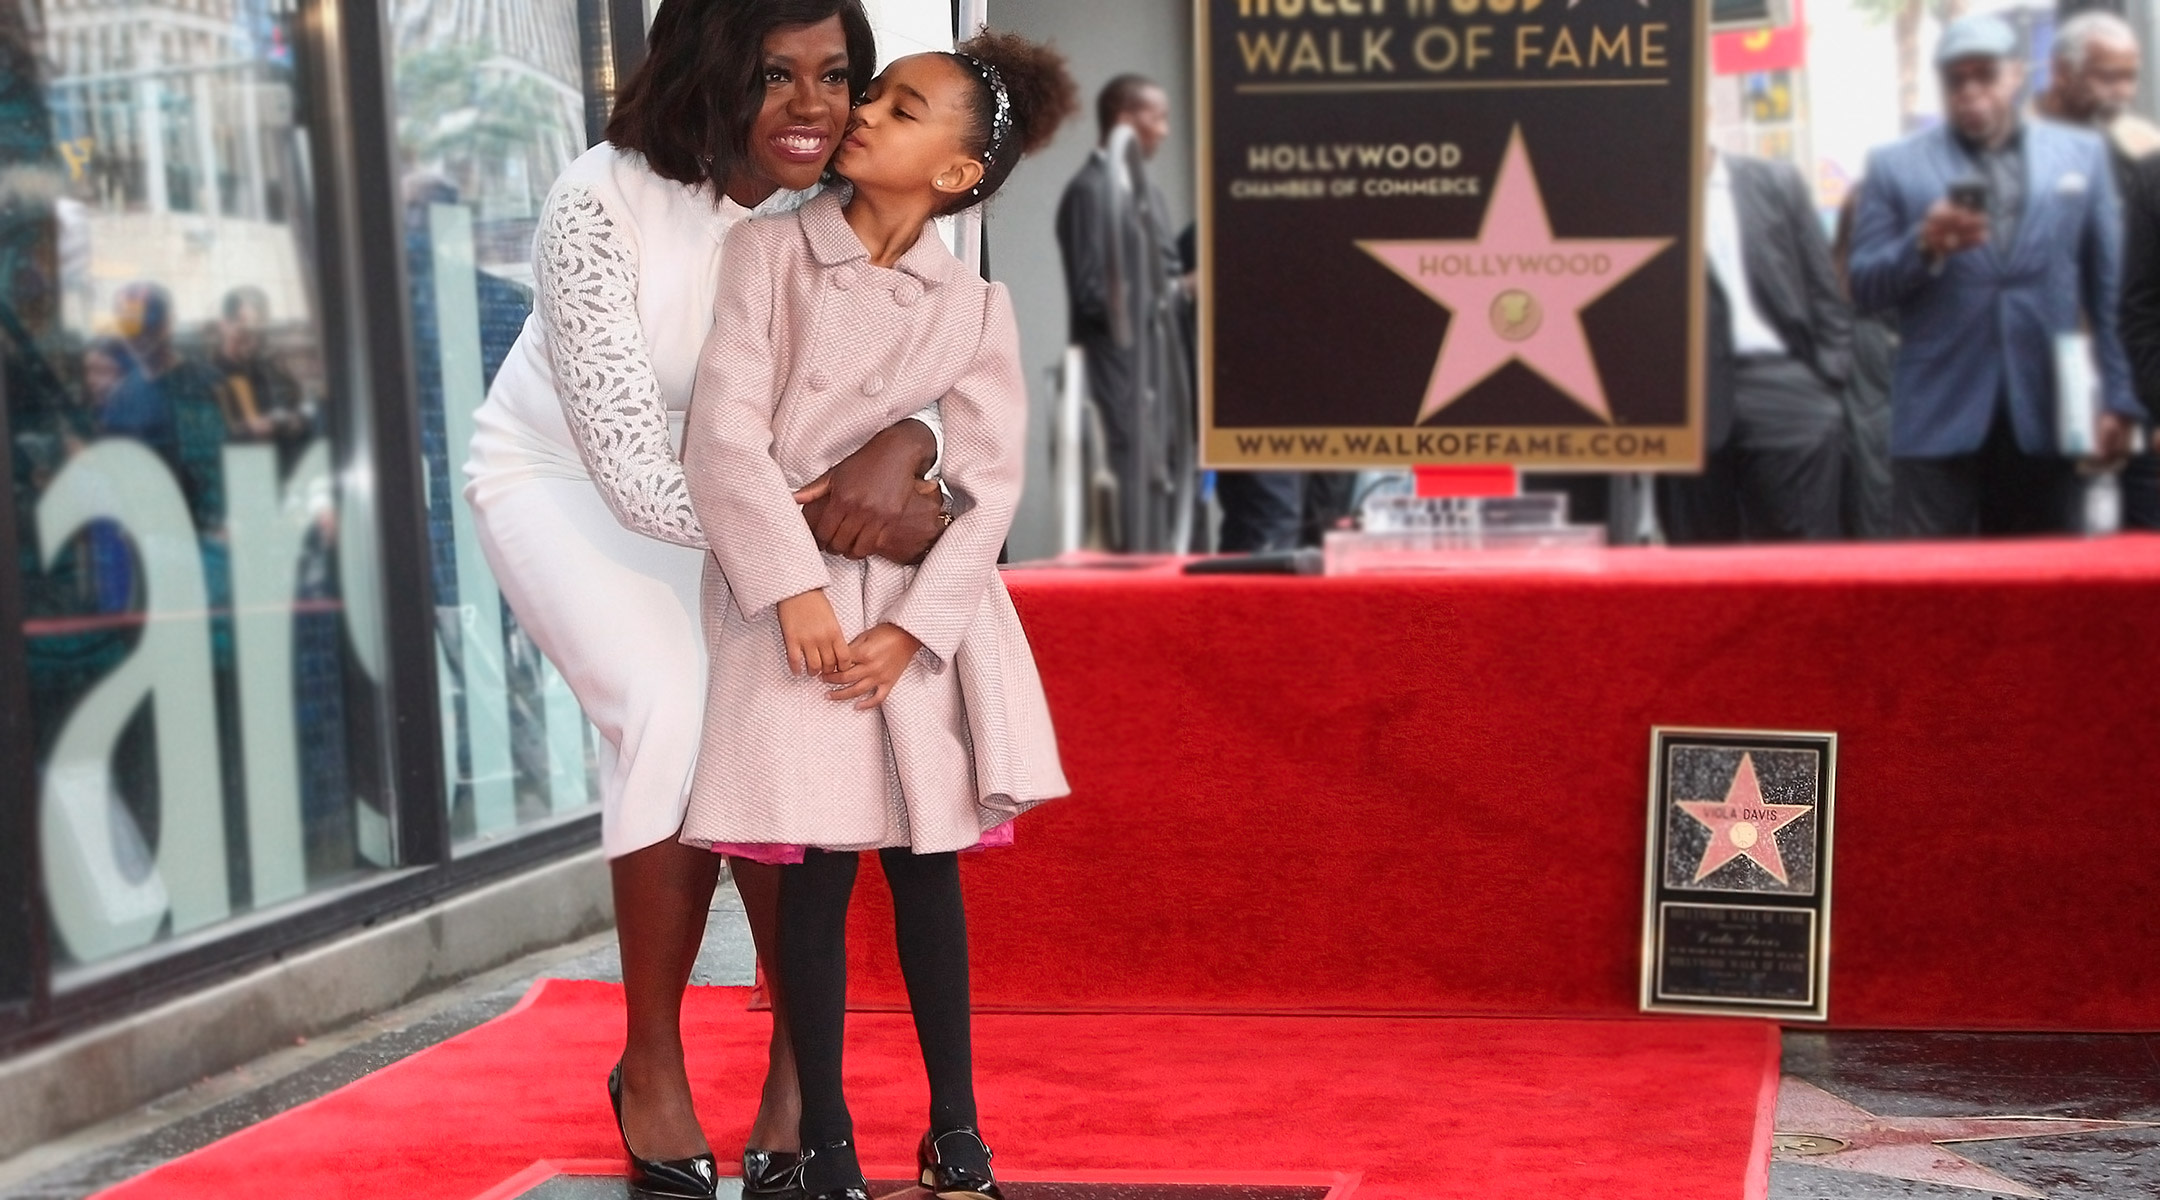 celebrity actress, Viola Davis with her adopted daughter, Genesis